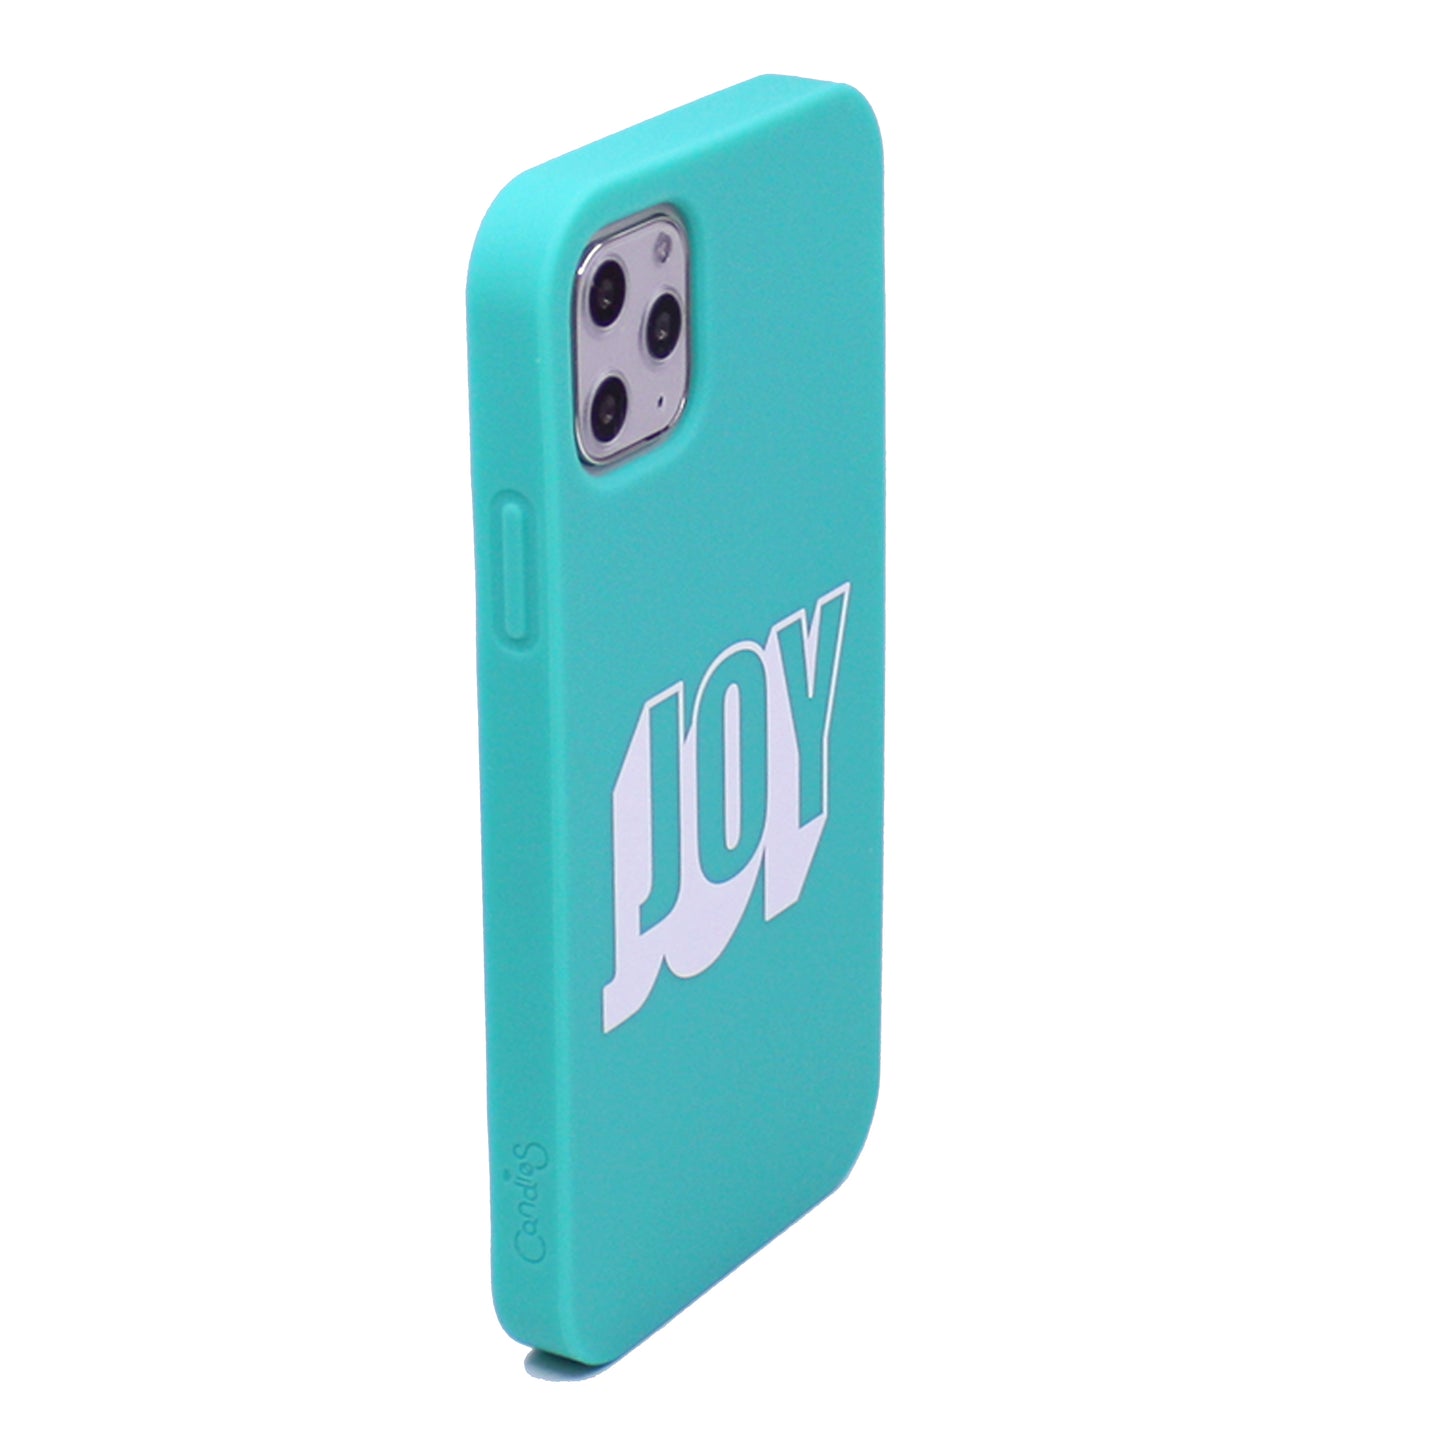 iPhone 11 Pro Max Simple Case - JOY